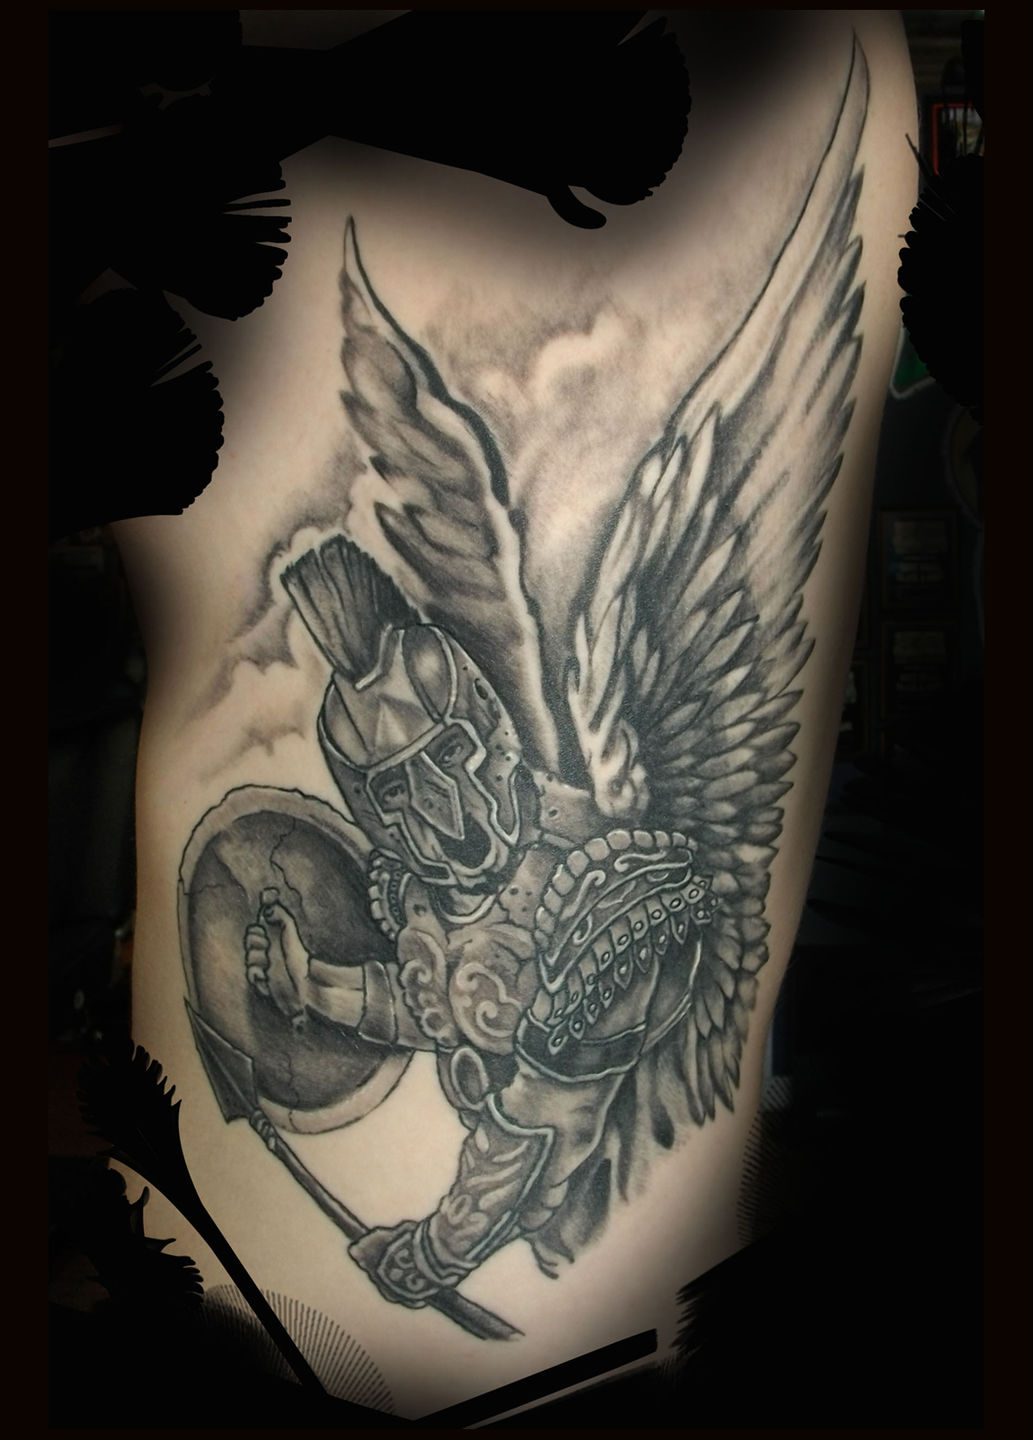 tattoo rib cage and angel  image 6003860 on Favimcom